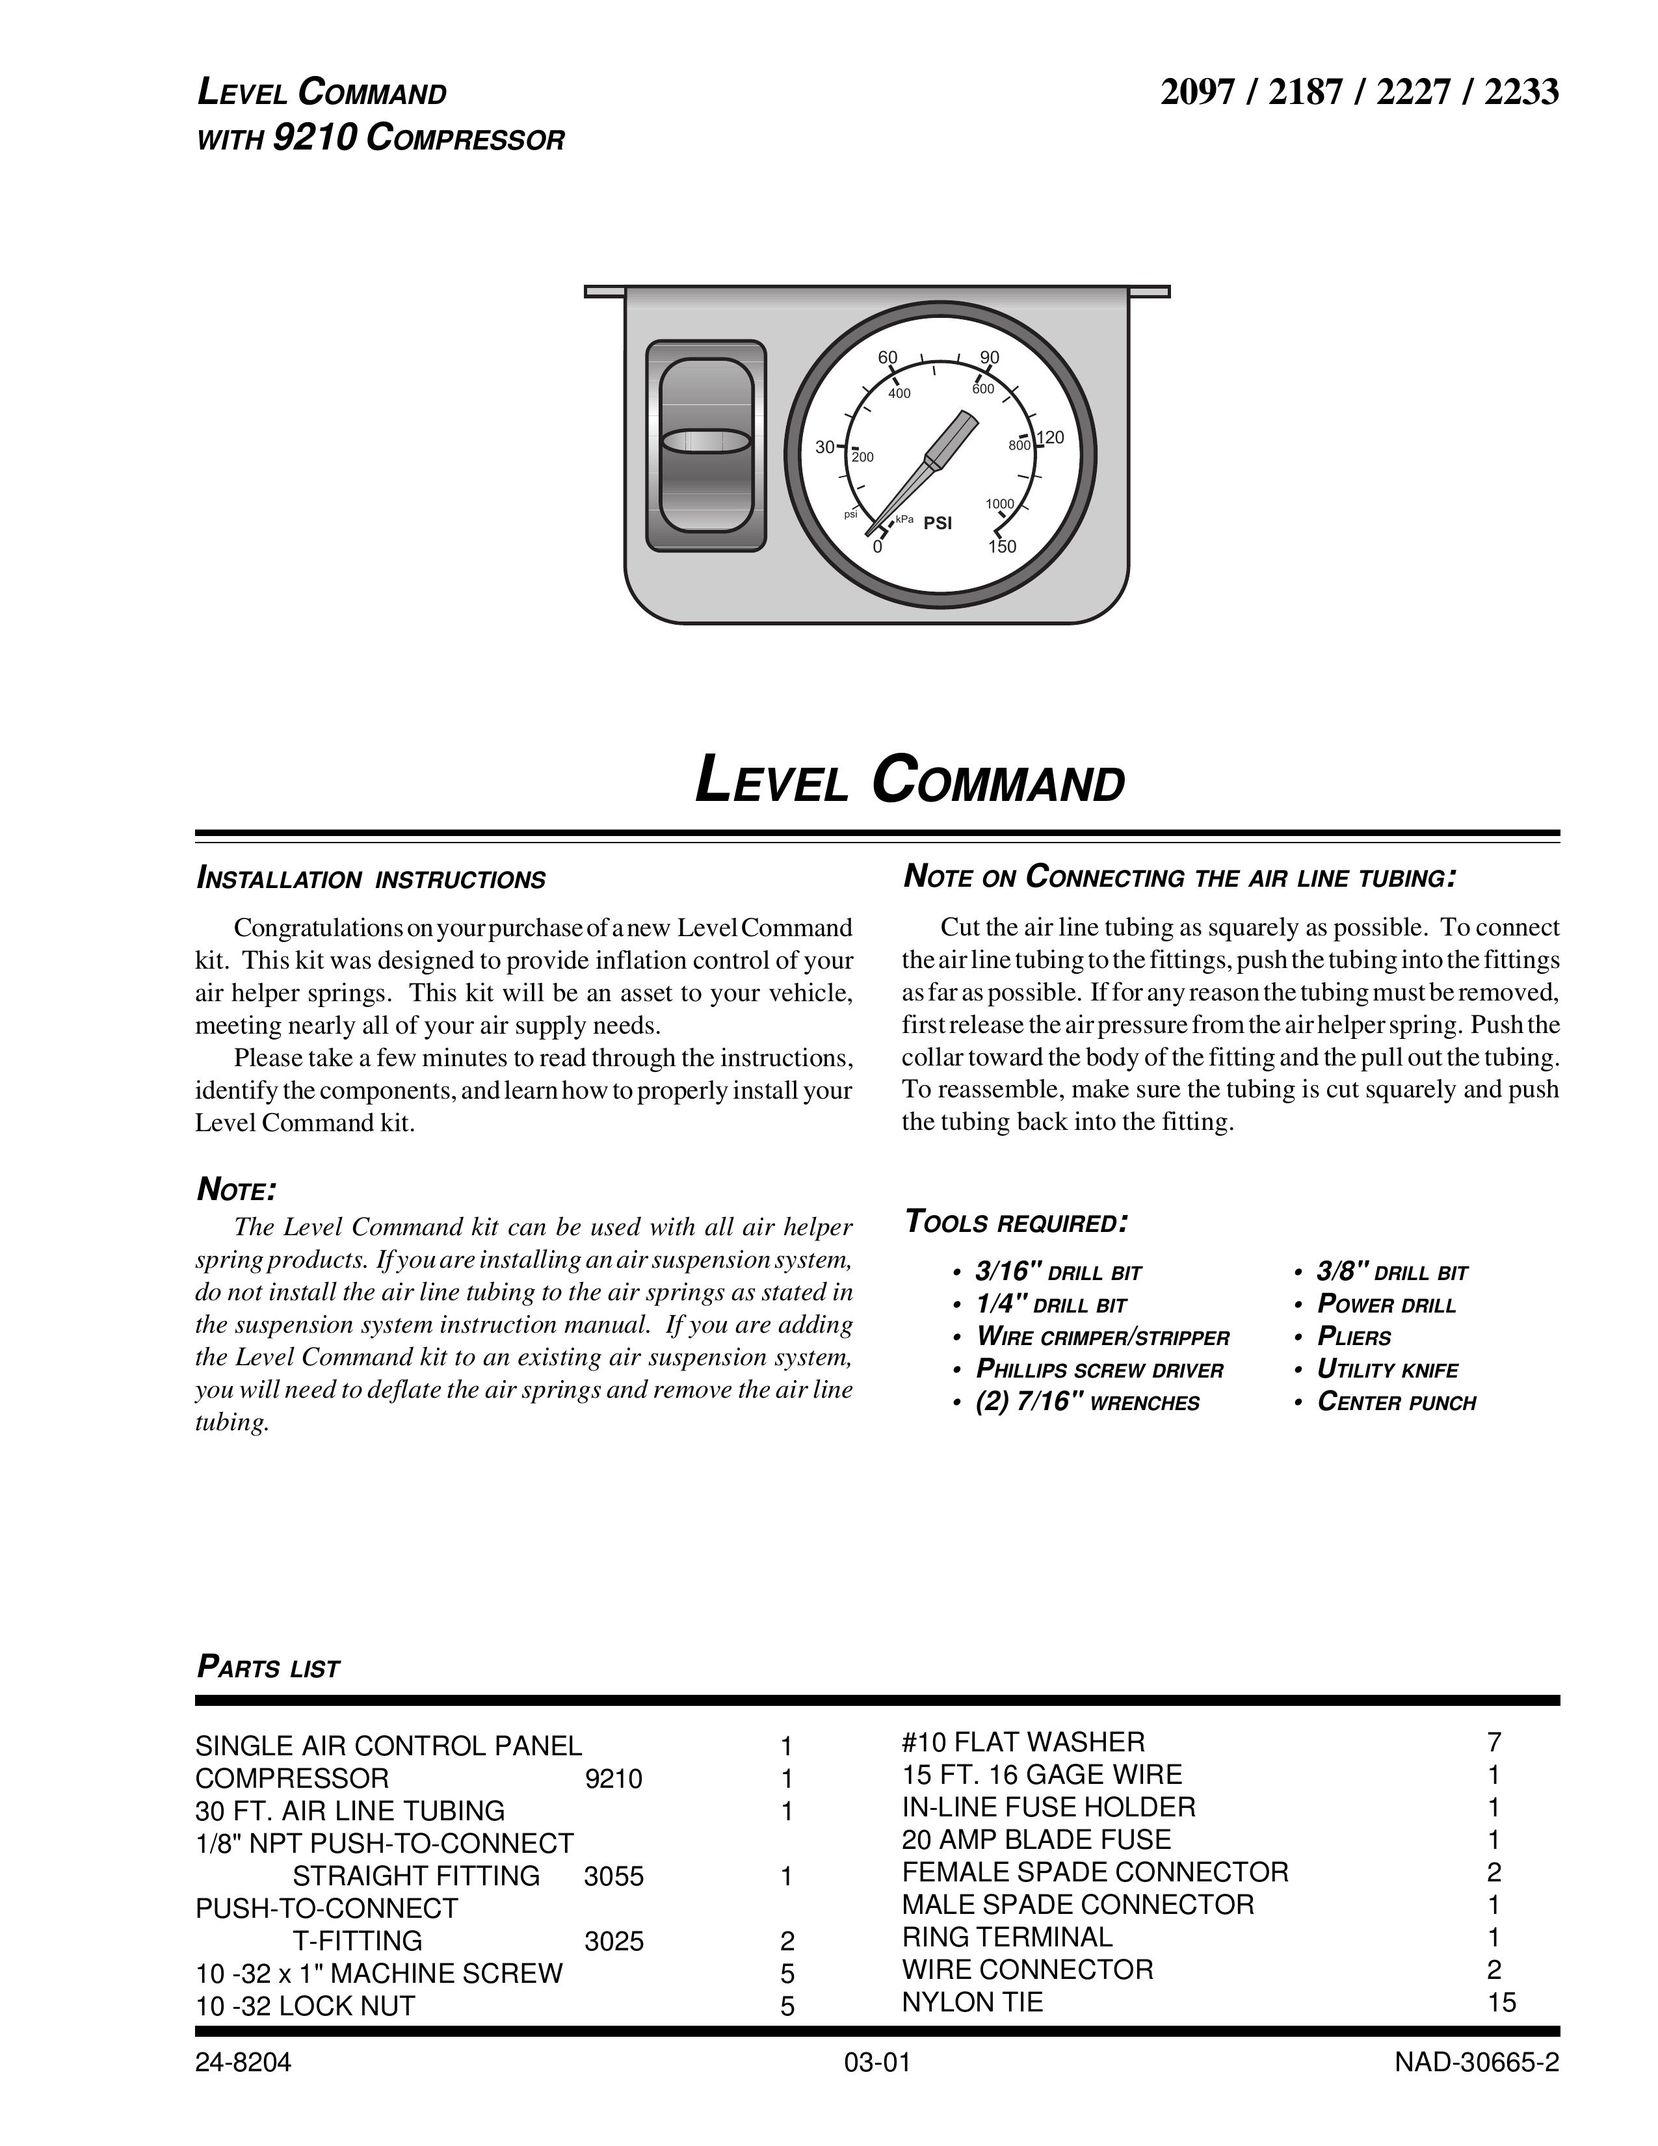 Black & Decker 2233 Air Compressor User Manual